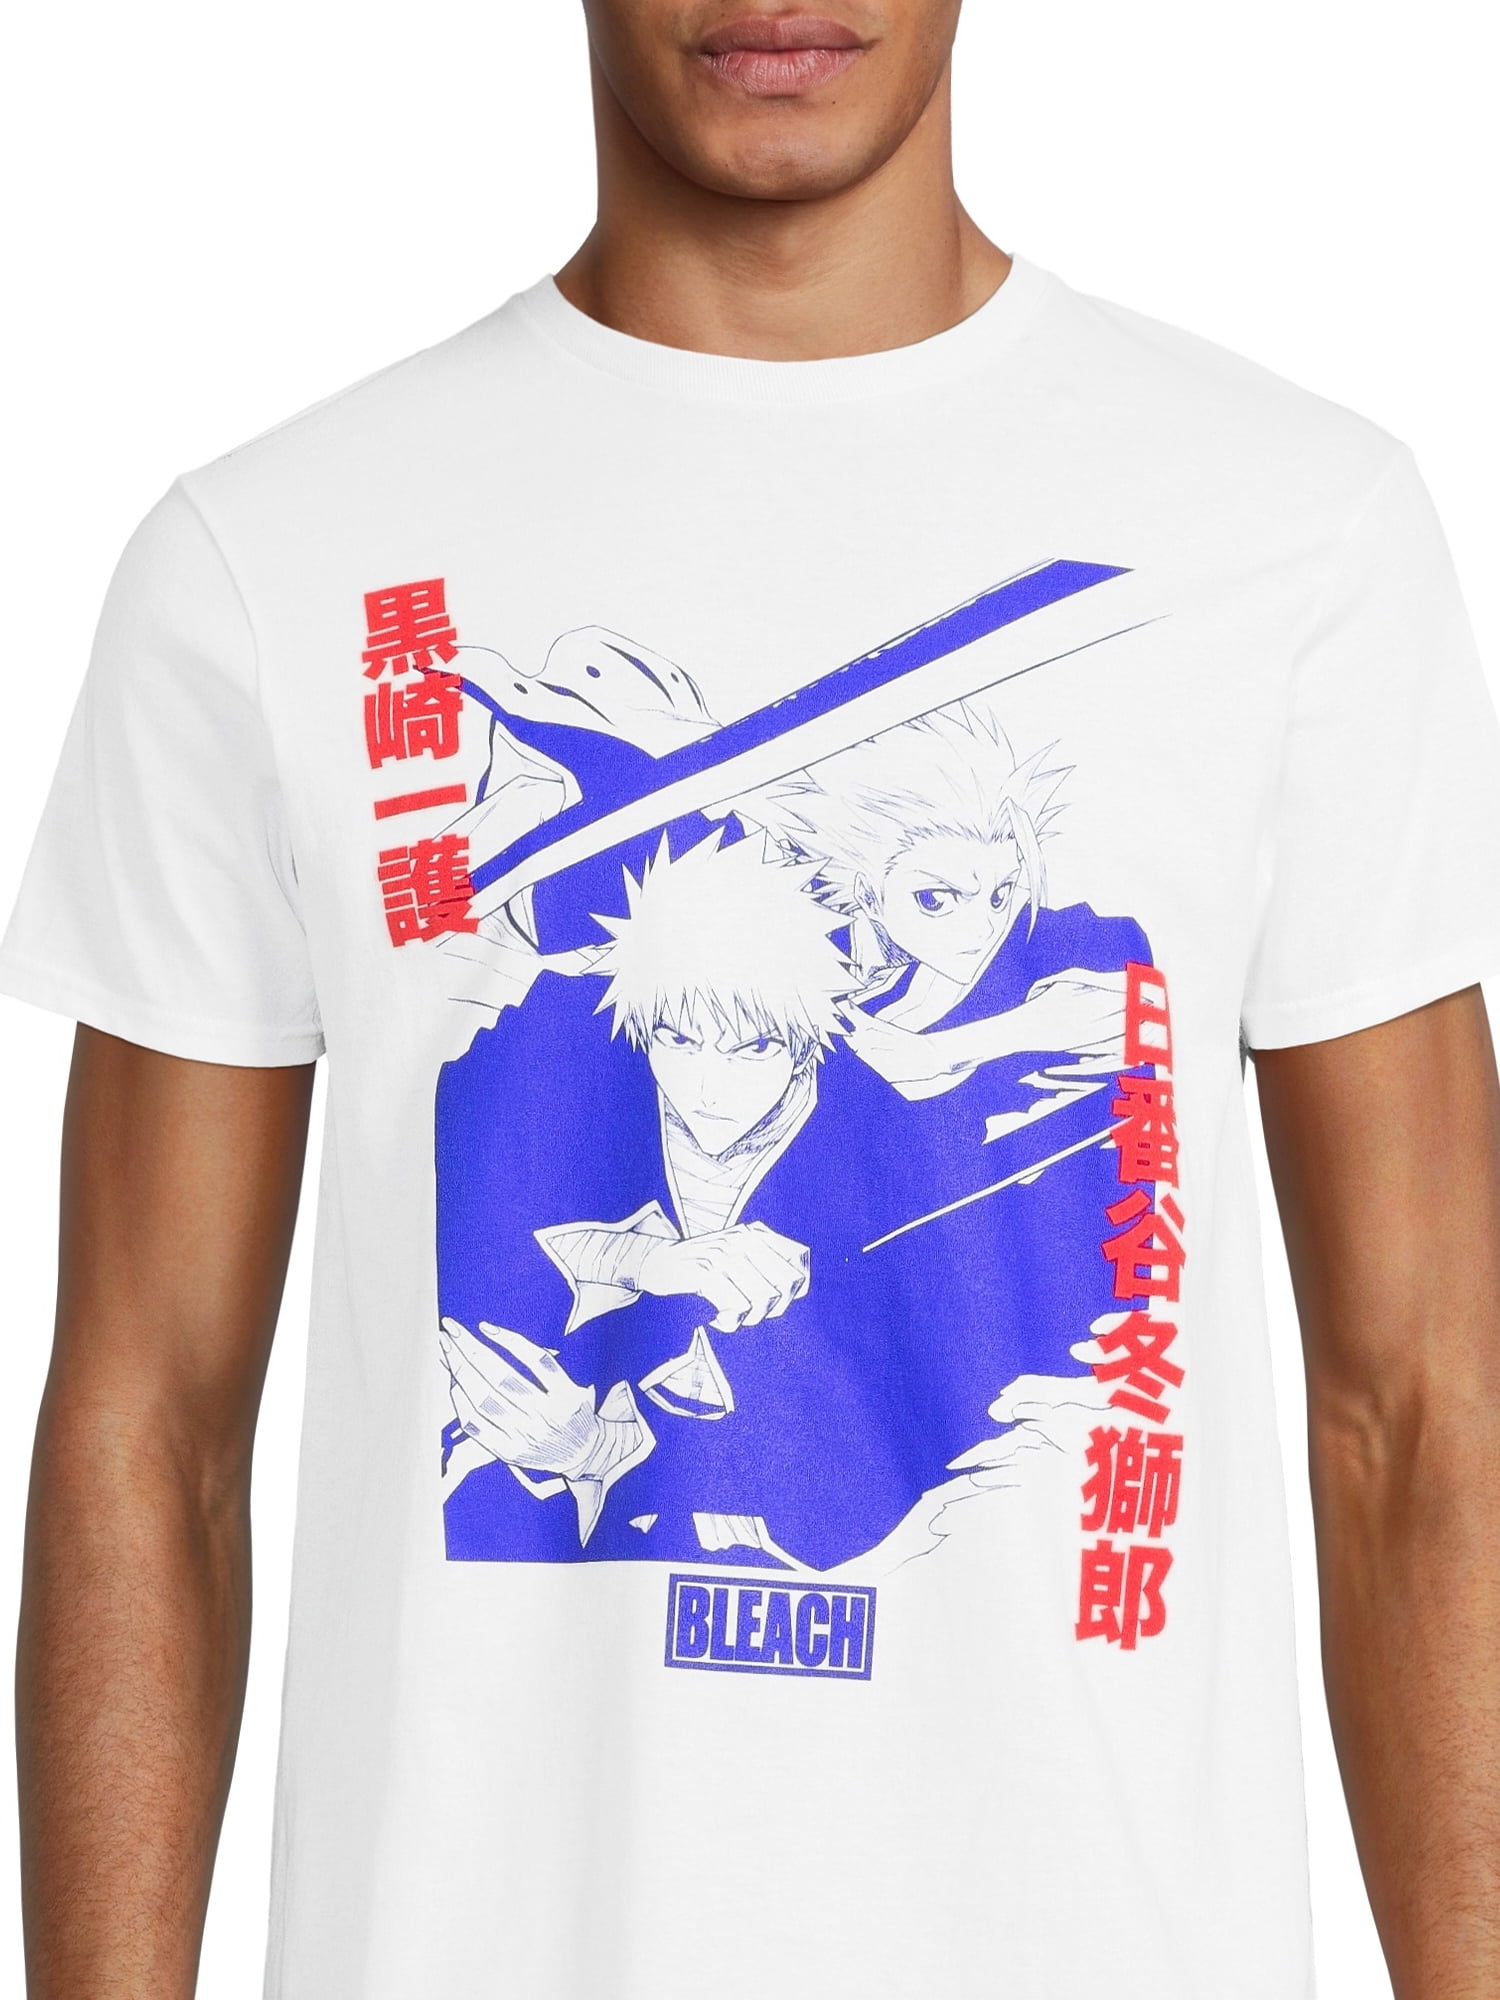 Hypland x Hunter x Hunter KILLUA Eye Blue & Black Tie Dye Anime T-Shirt  Size S | eBay